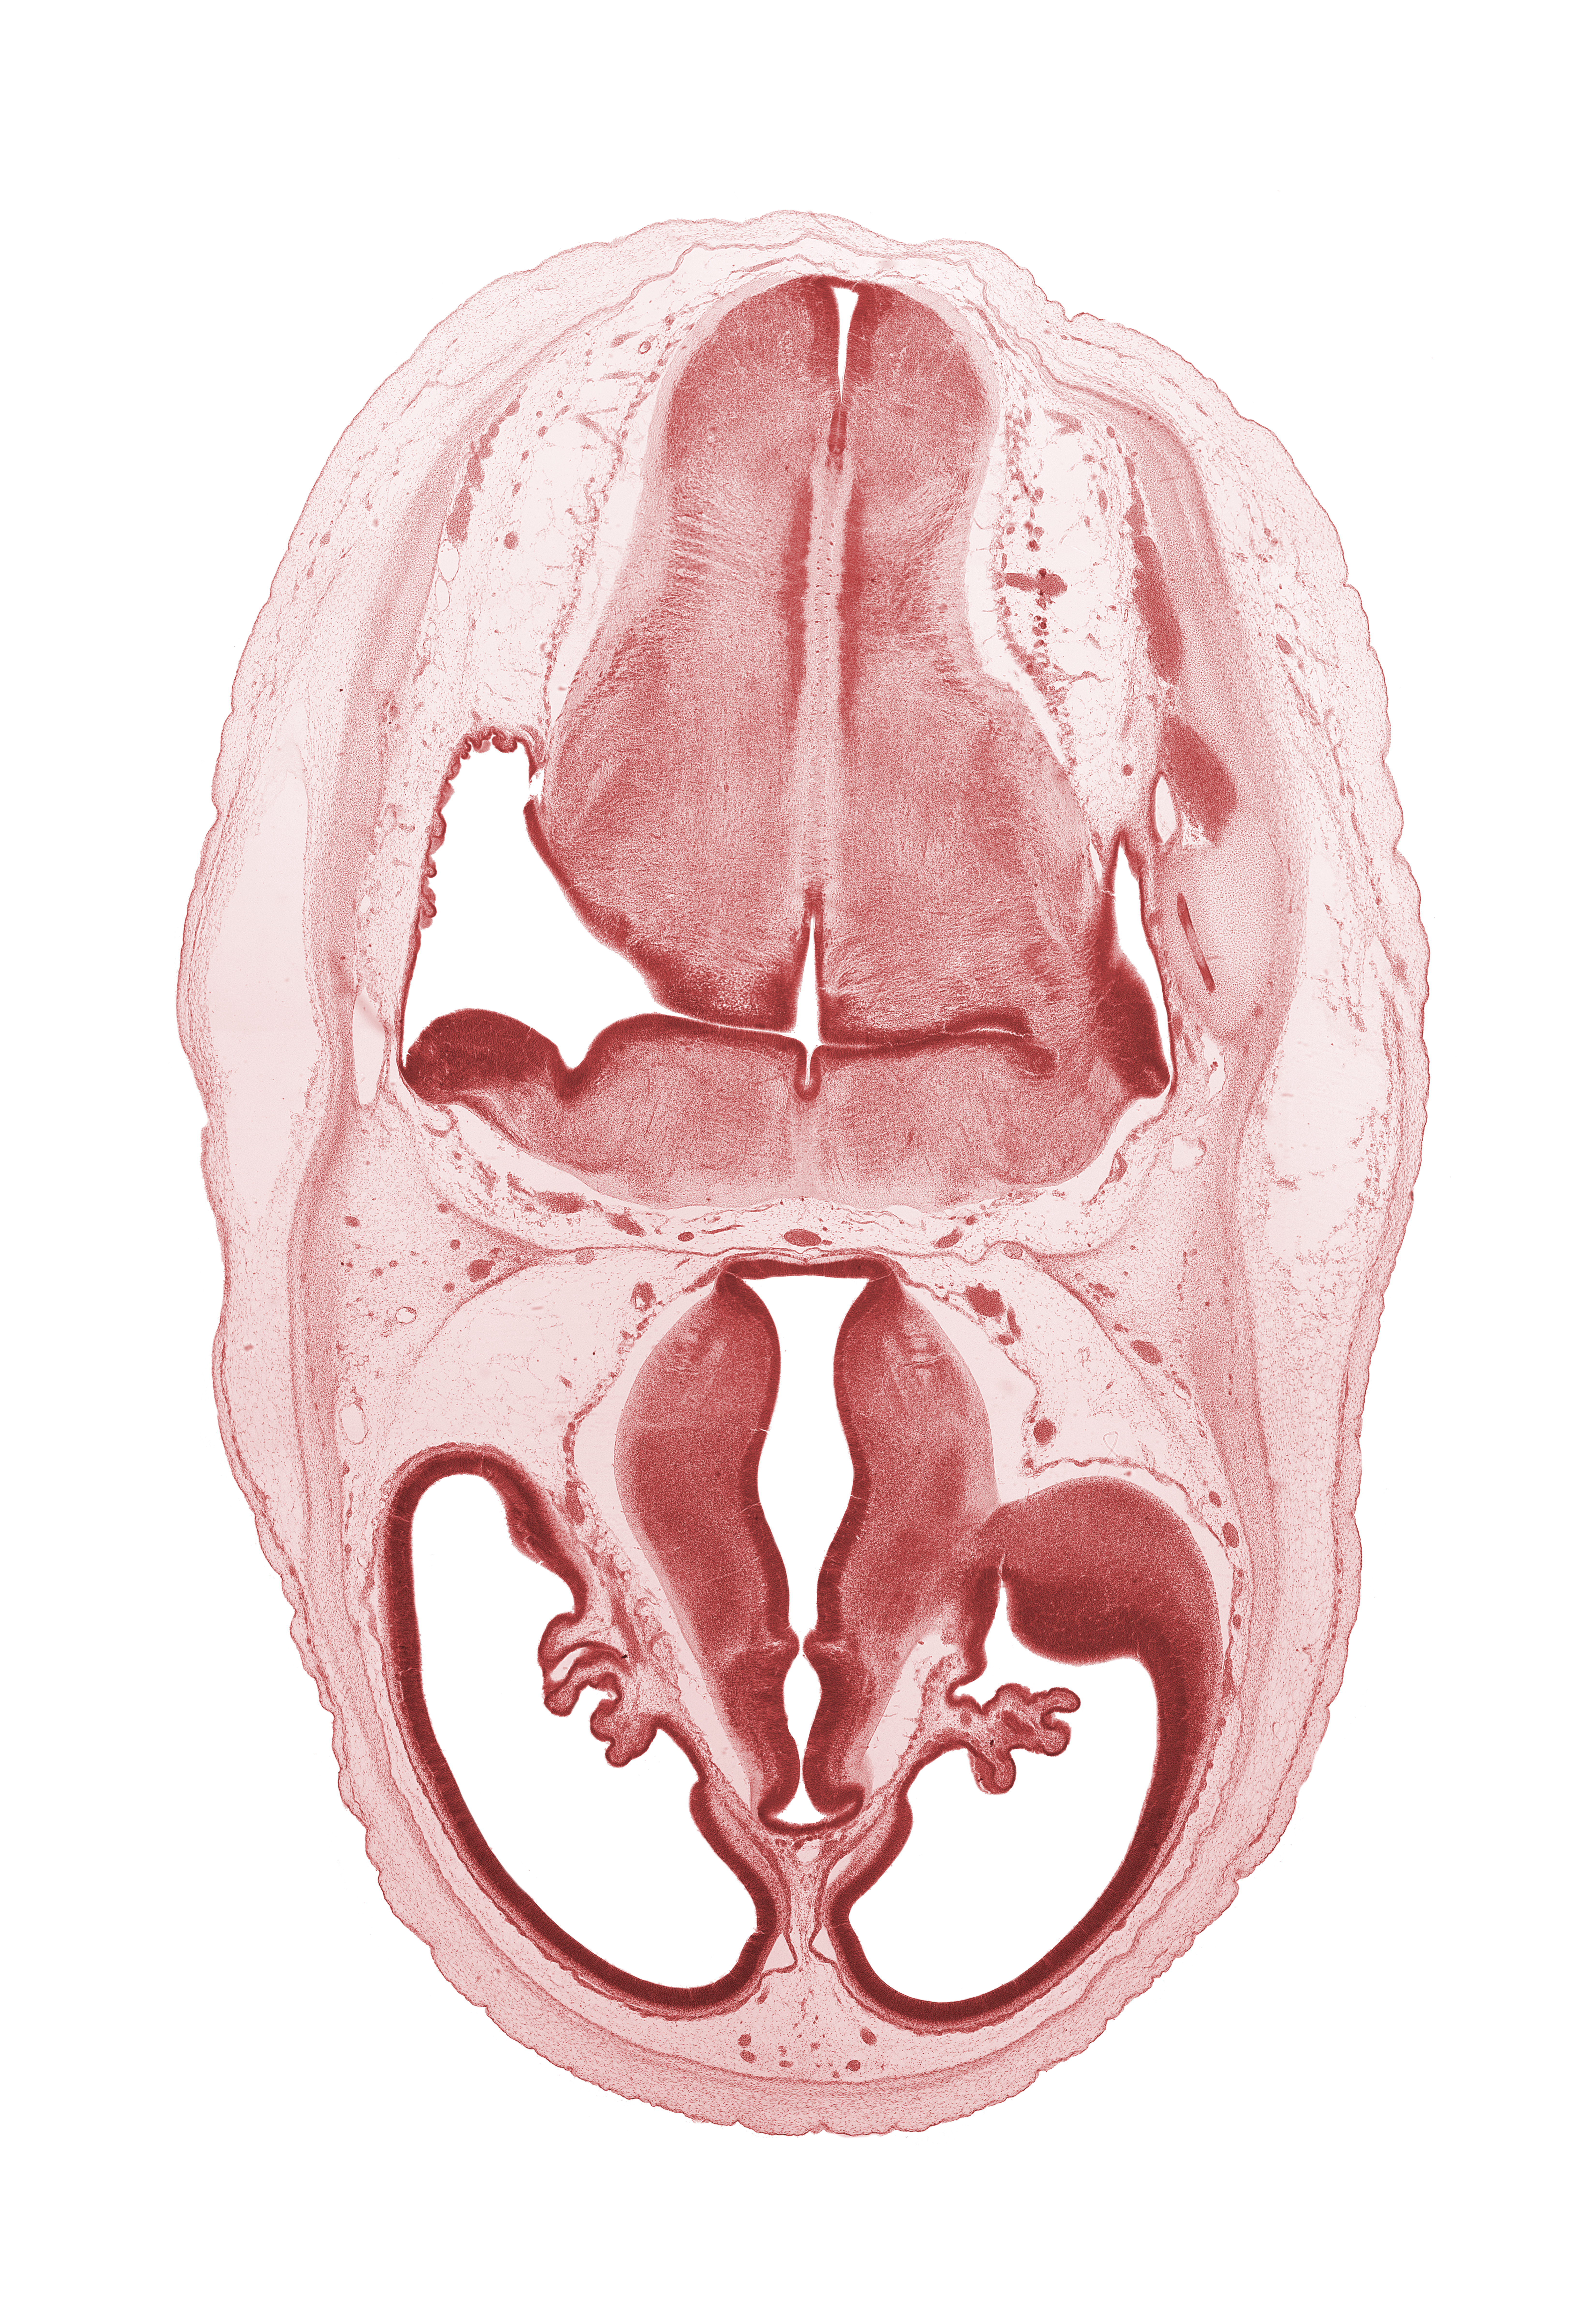 artifact separation(s), basilar artery, cerebral vesicle (telencephalon), choroid fissure, choroid plexus, dural band for tentorium cerebelli, hypothalamic sulcus, hypothalamus, lateral ventricle, marginal ridge, obex, oculomotor nerve (CN III), osteogenic layer, pons region (metencephalon), posterior dural venous plexus, primordial sigmoid sinus, venous plexus(es), ventral thalamus